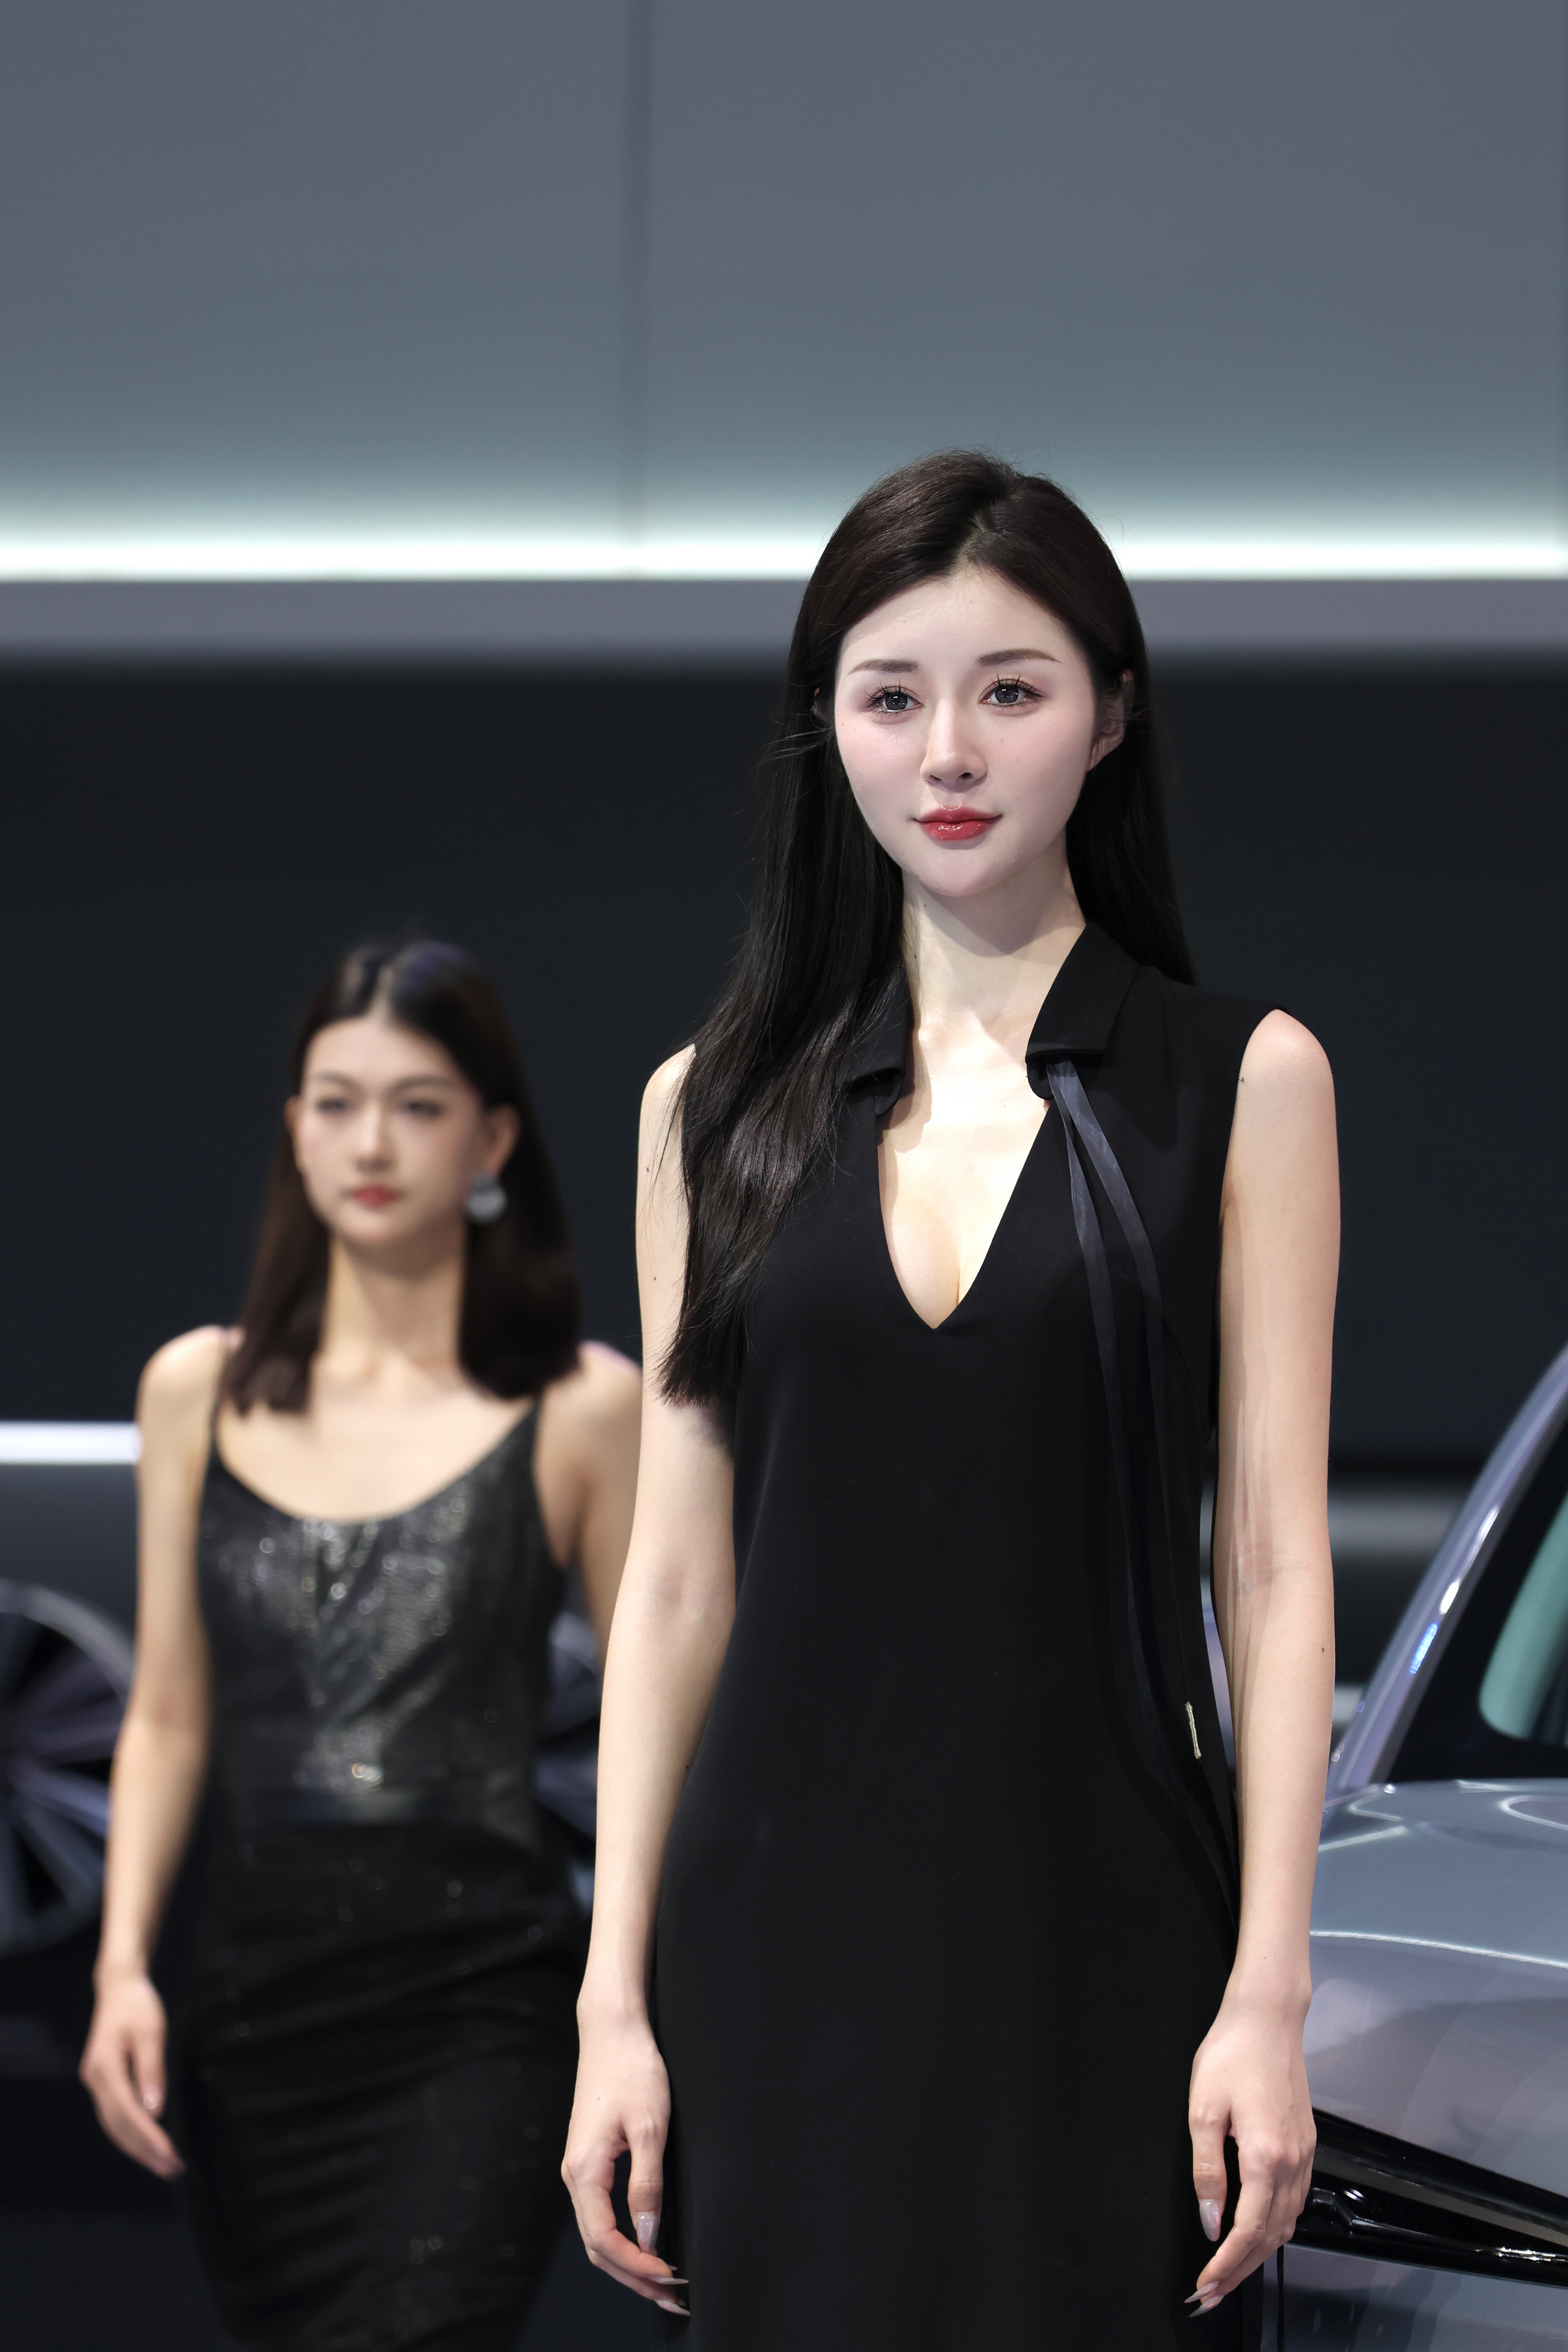 People 2816x4224 model women indoors chest up women Asian car portrait display